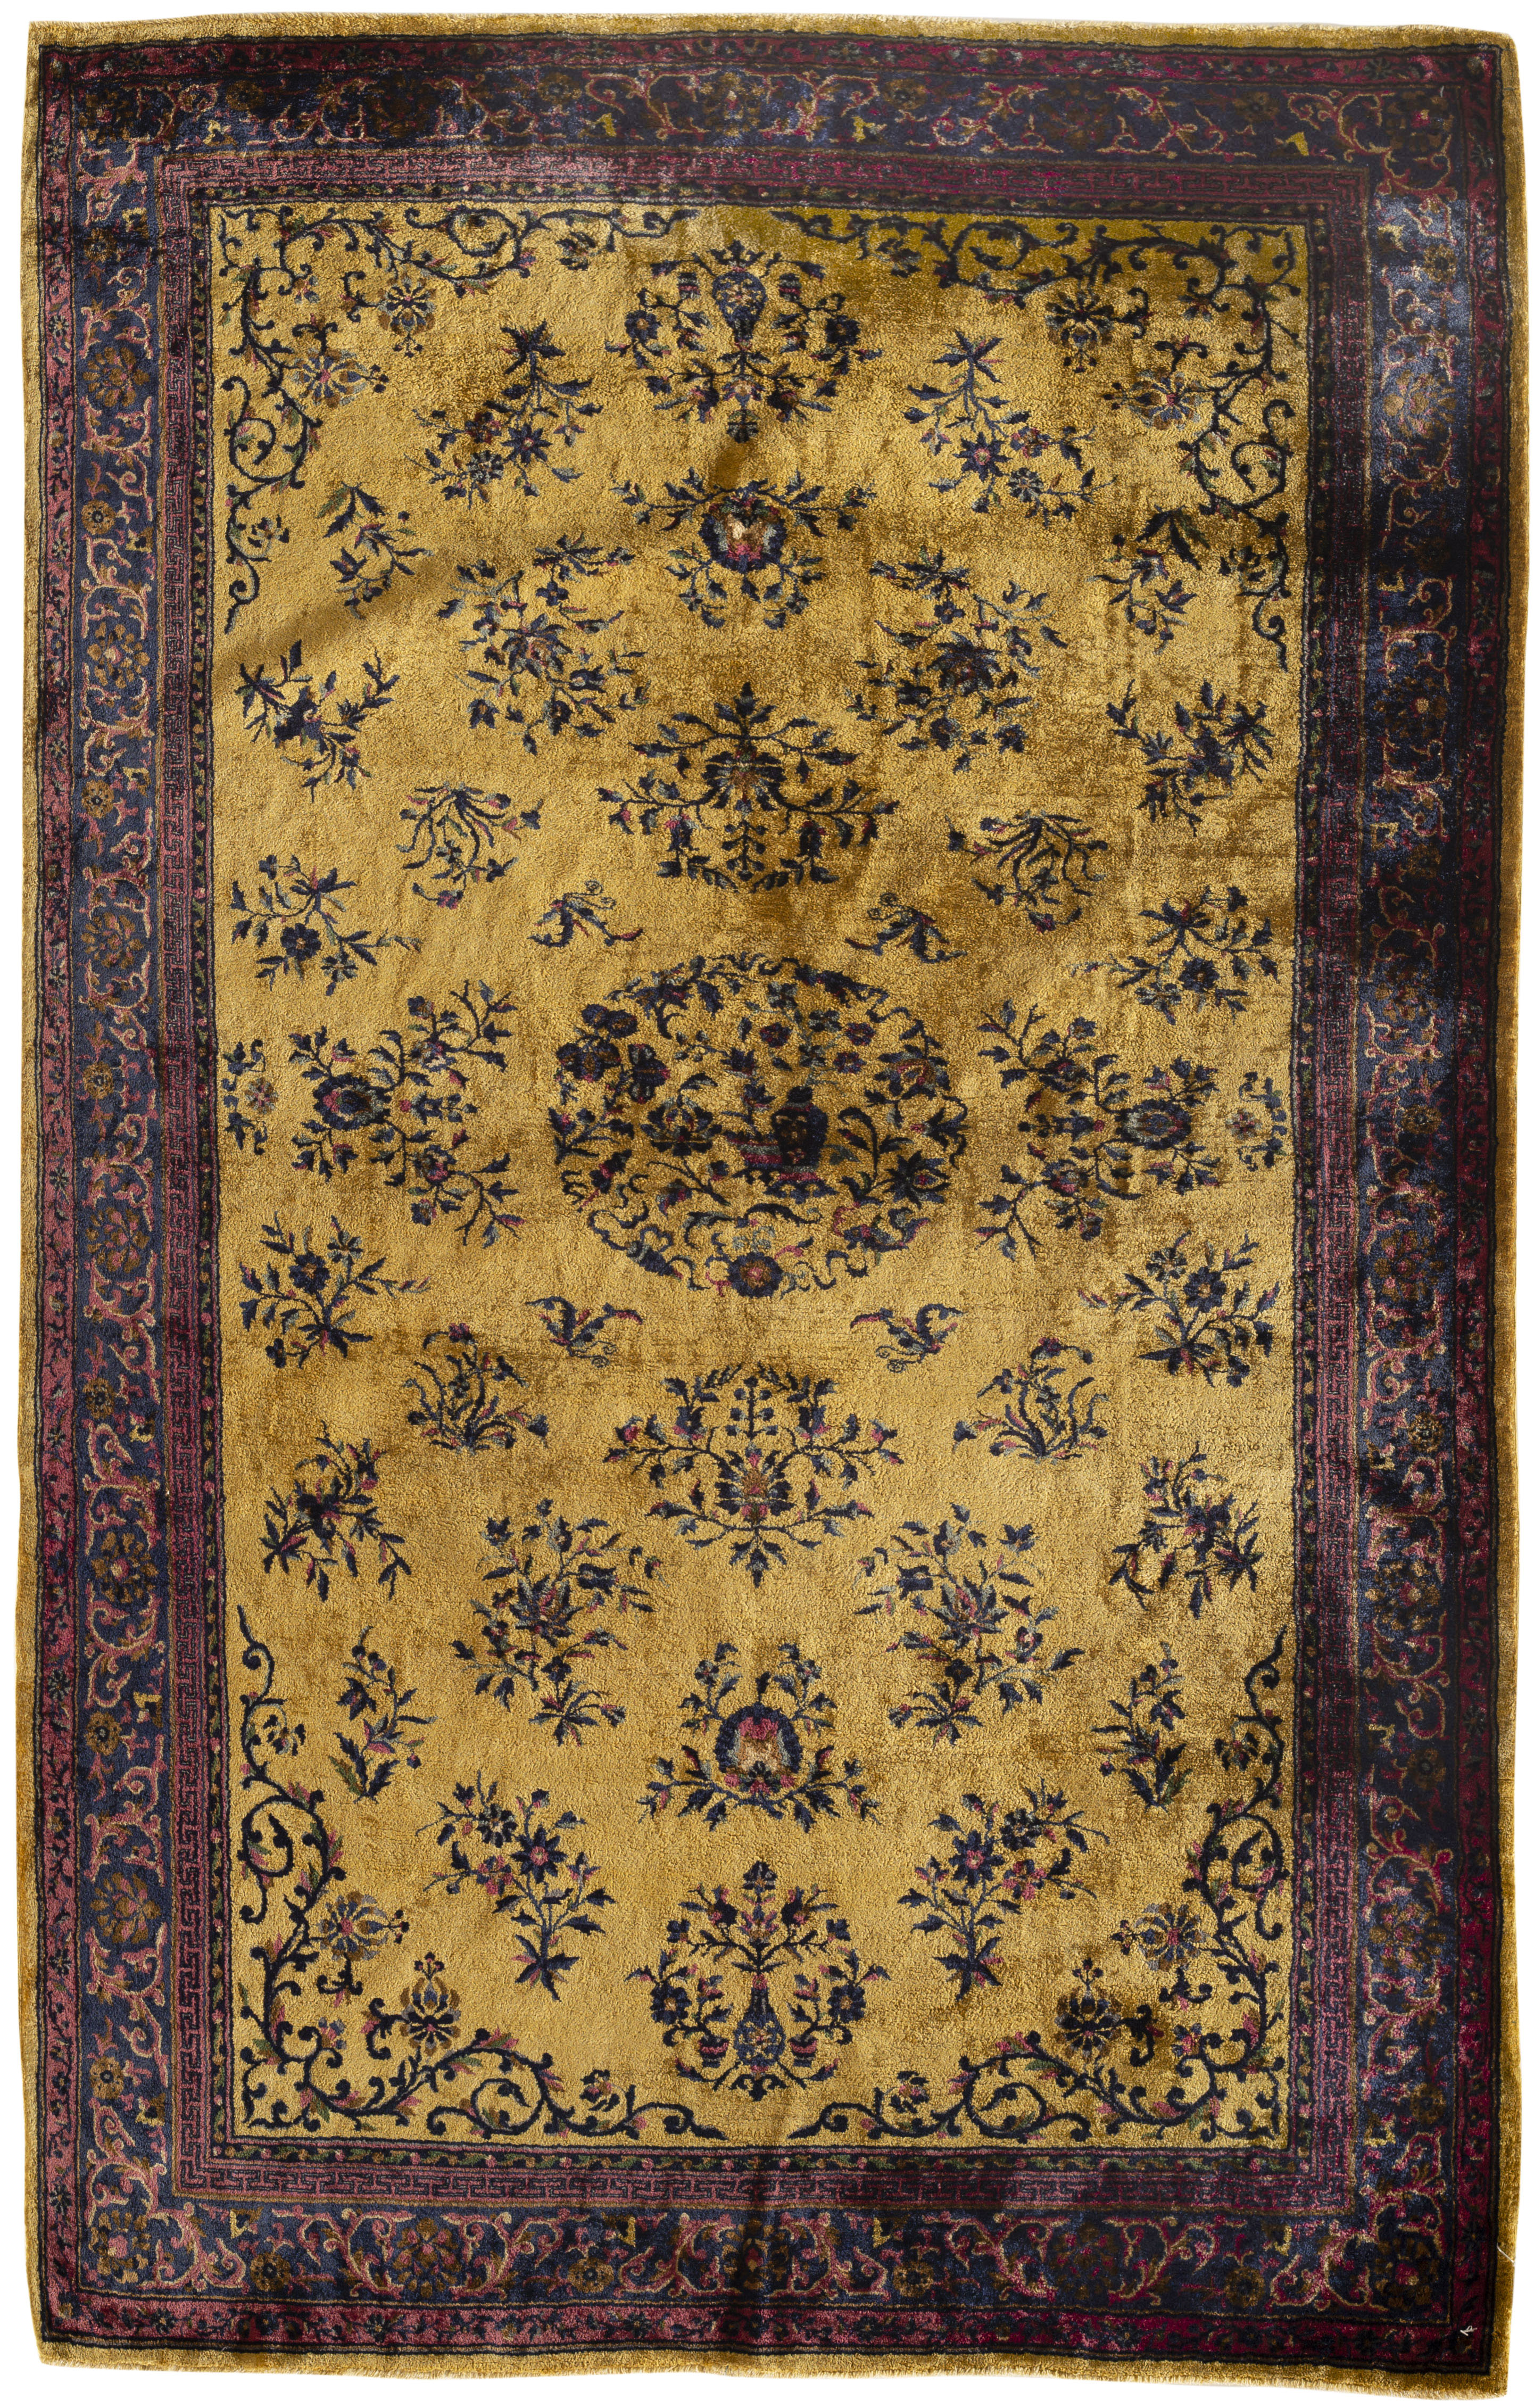 Antique Persian Silk Kashan Rug circa 1900. - Antique Rugs